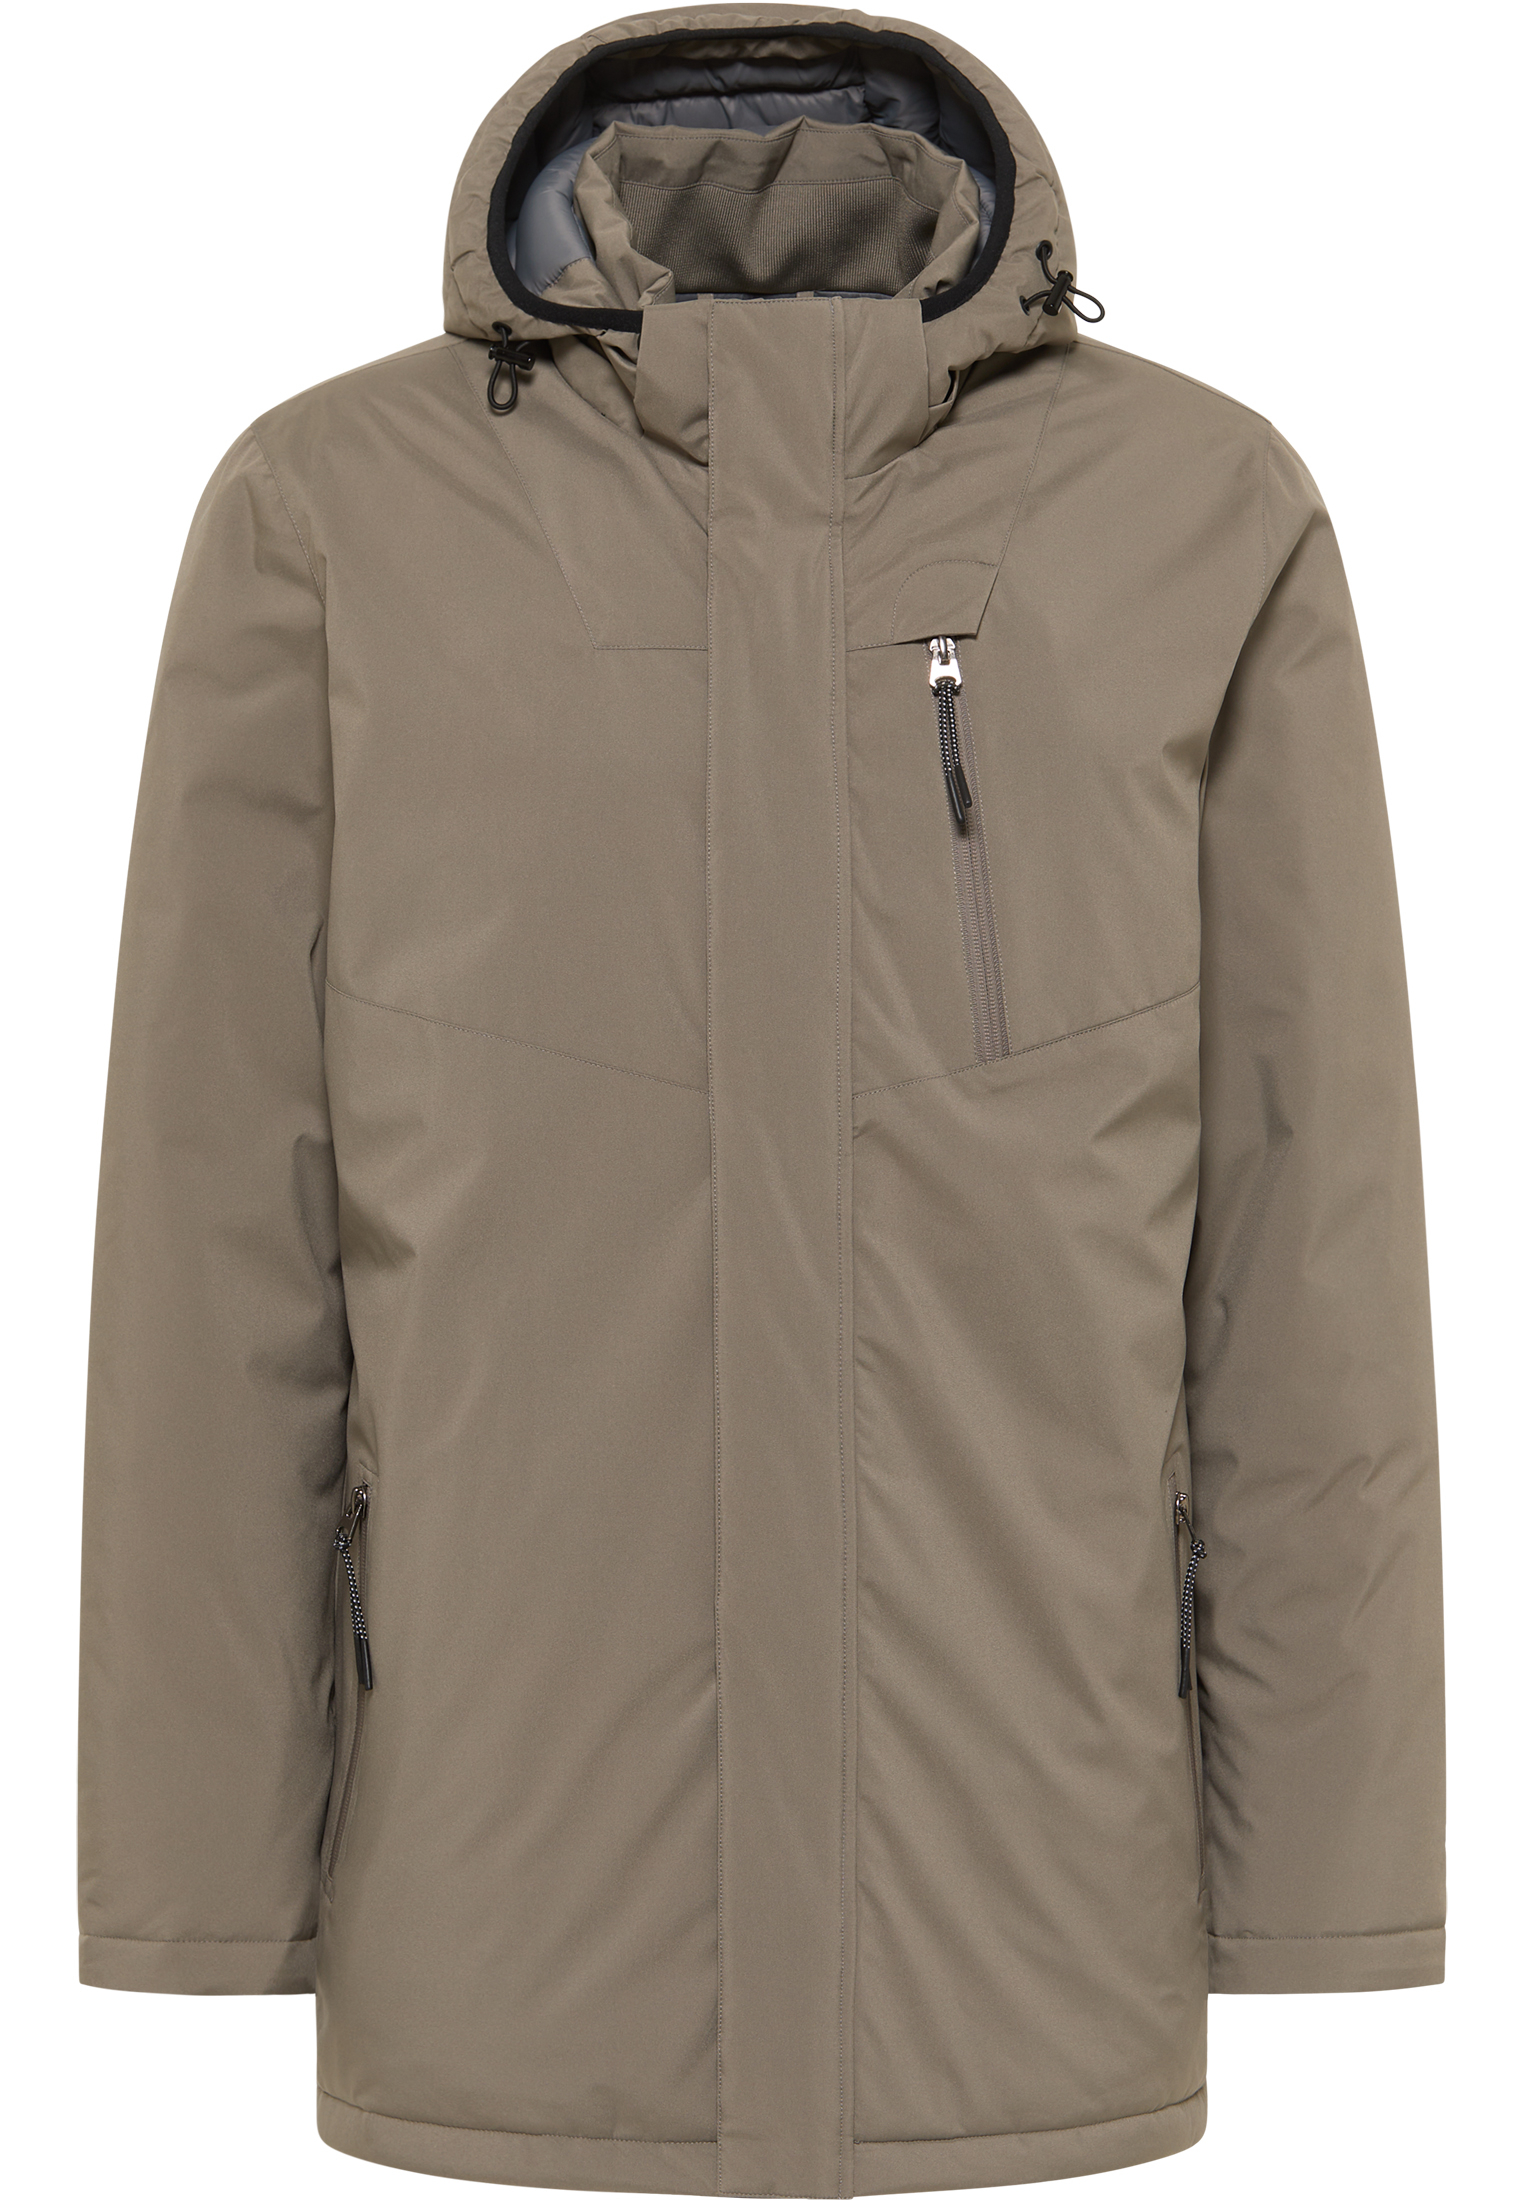 Parka jacket in grey plain